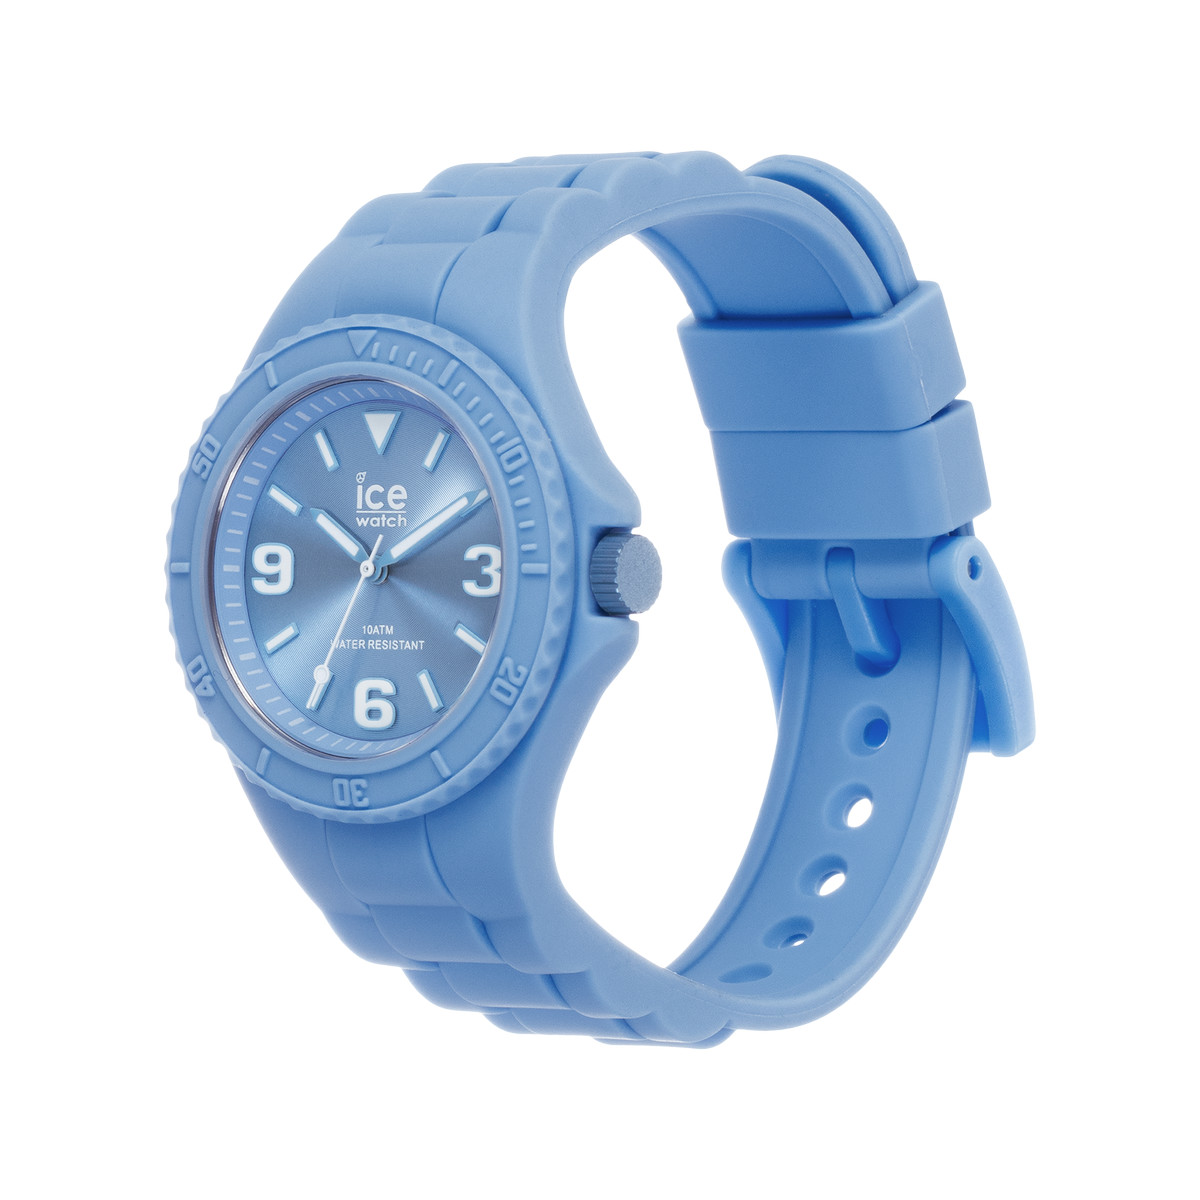 Montre Ice Watch small femme plastique silicone bleu - vue 5